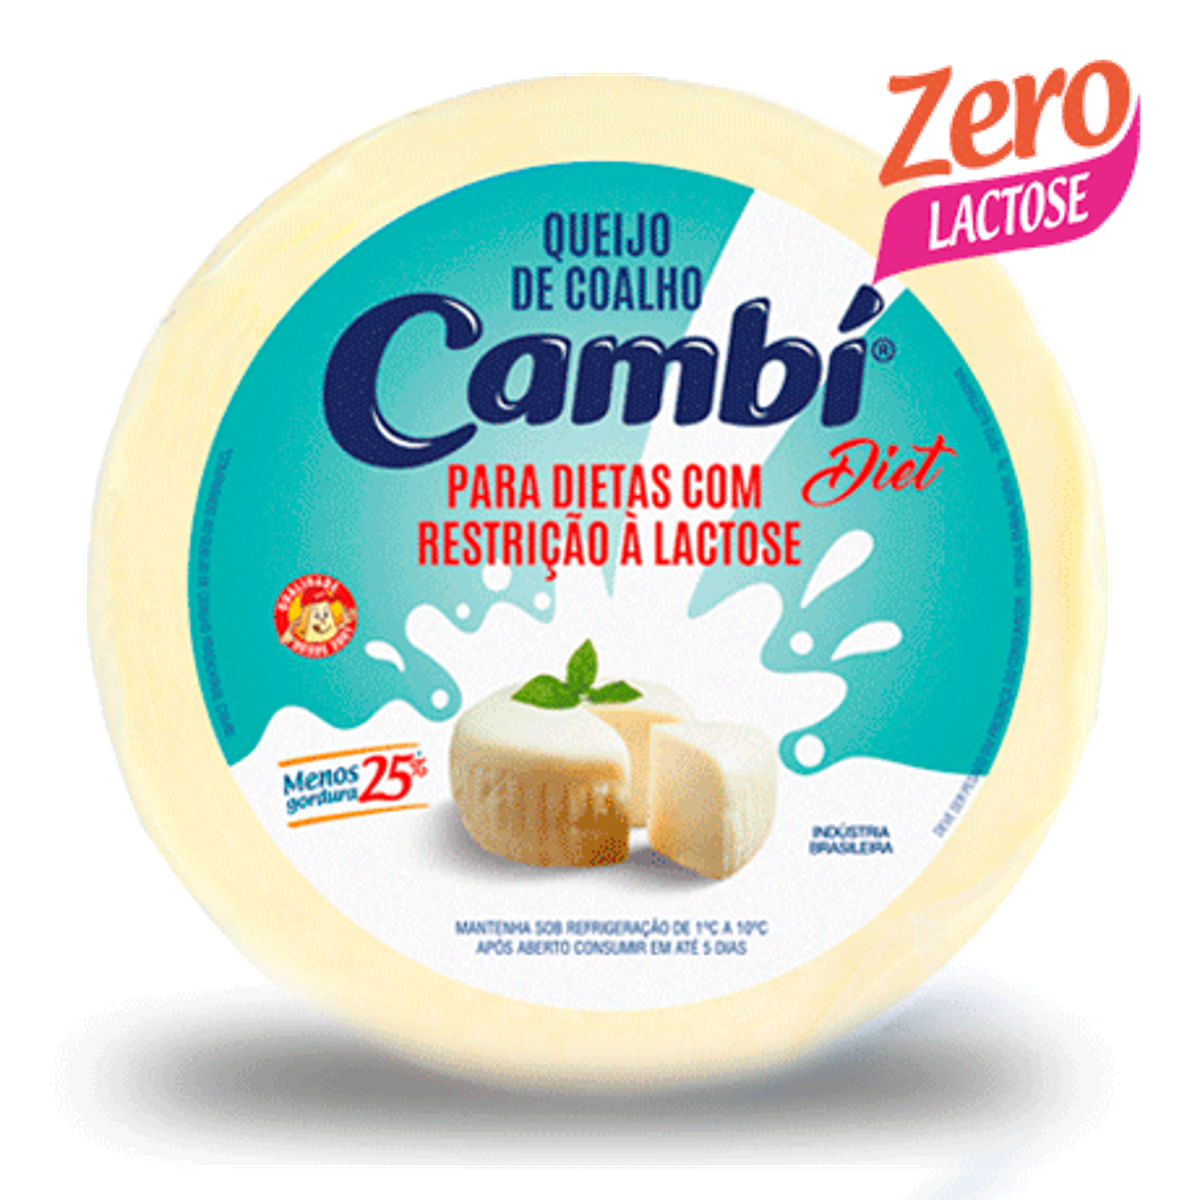 queijo-coalho-zr-lactose-cambi-kg-1.jpg